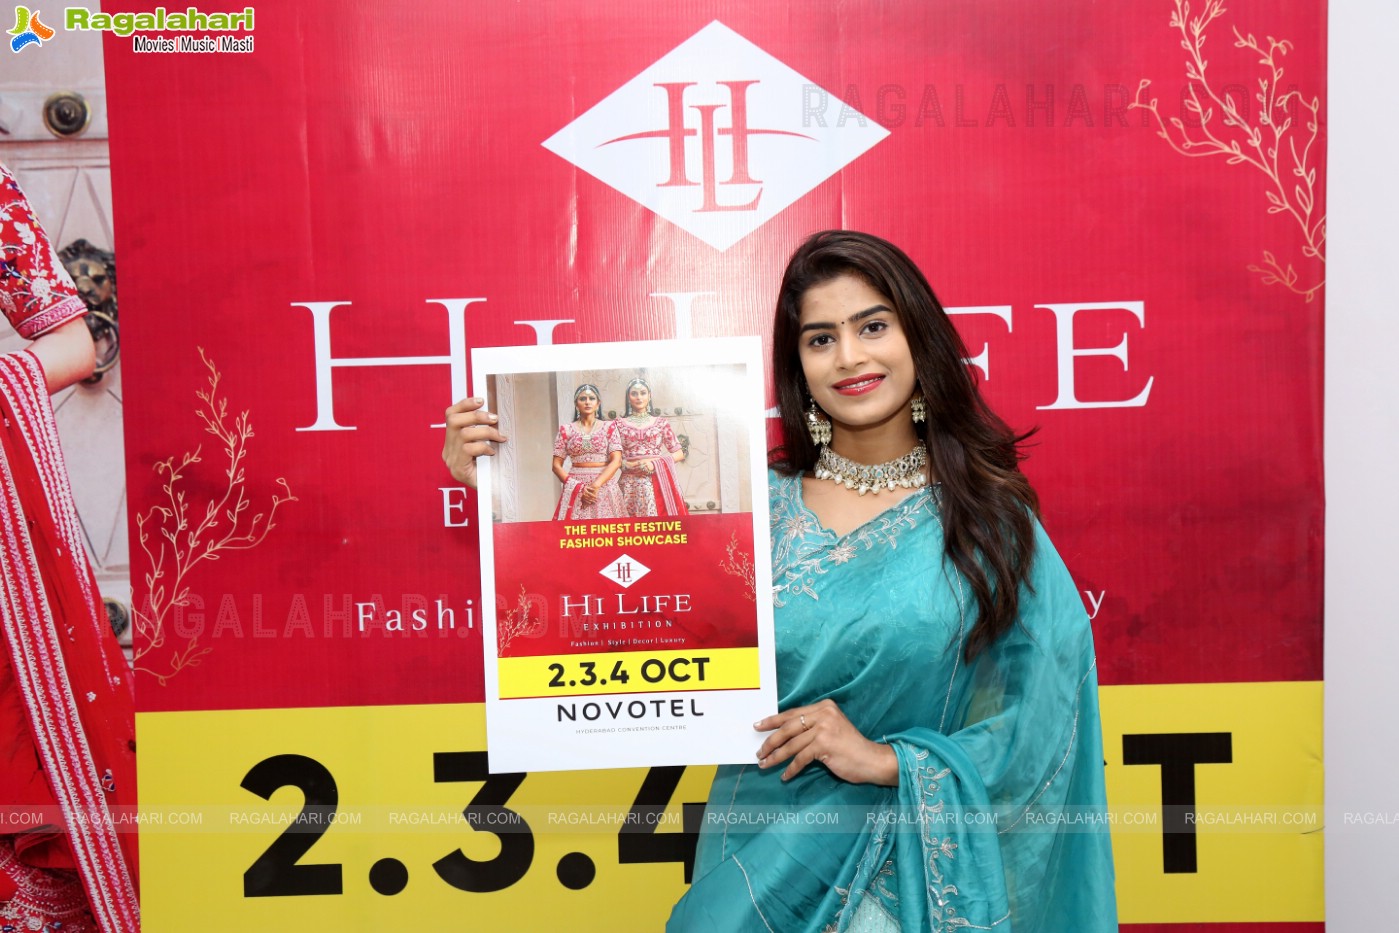 Hi Life Exhibition October 2022 Curtain Raiser and Fashion Showcase, Hyderabad